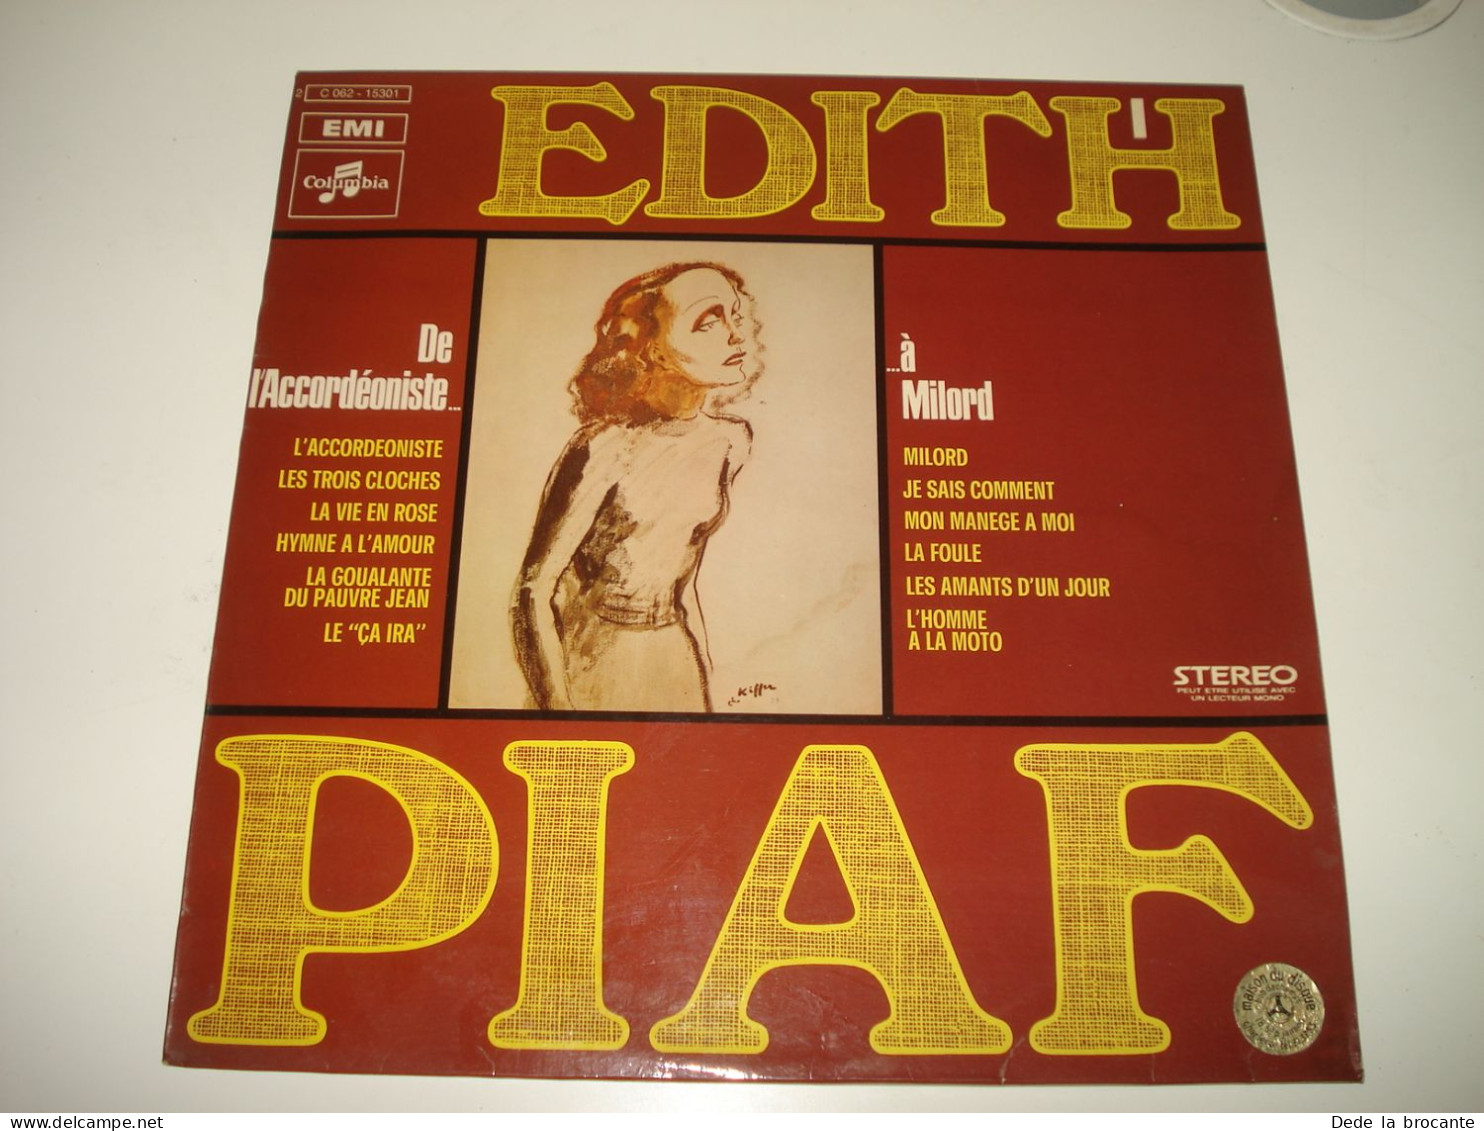 B12 / Edith Piaf - De L'accordéoniste À Milord  - Volume 1 - LP - 2C 062-15301  FR 1971  NM/NM - Disco & Pop